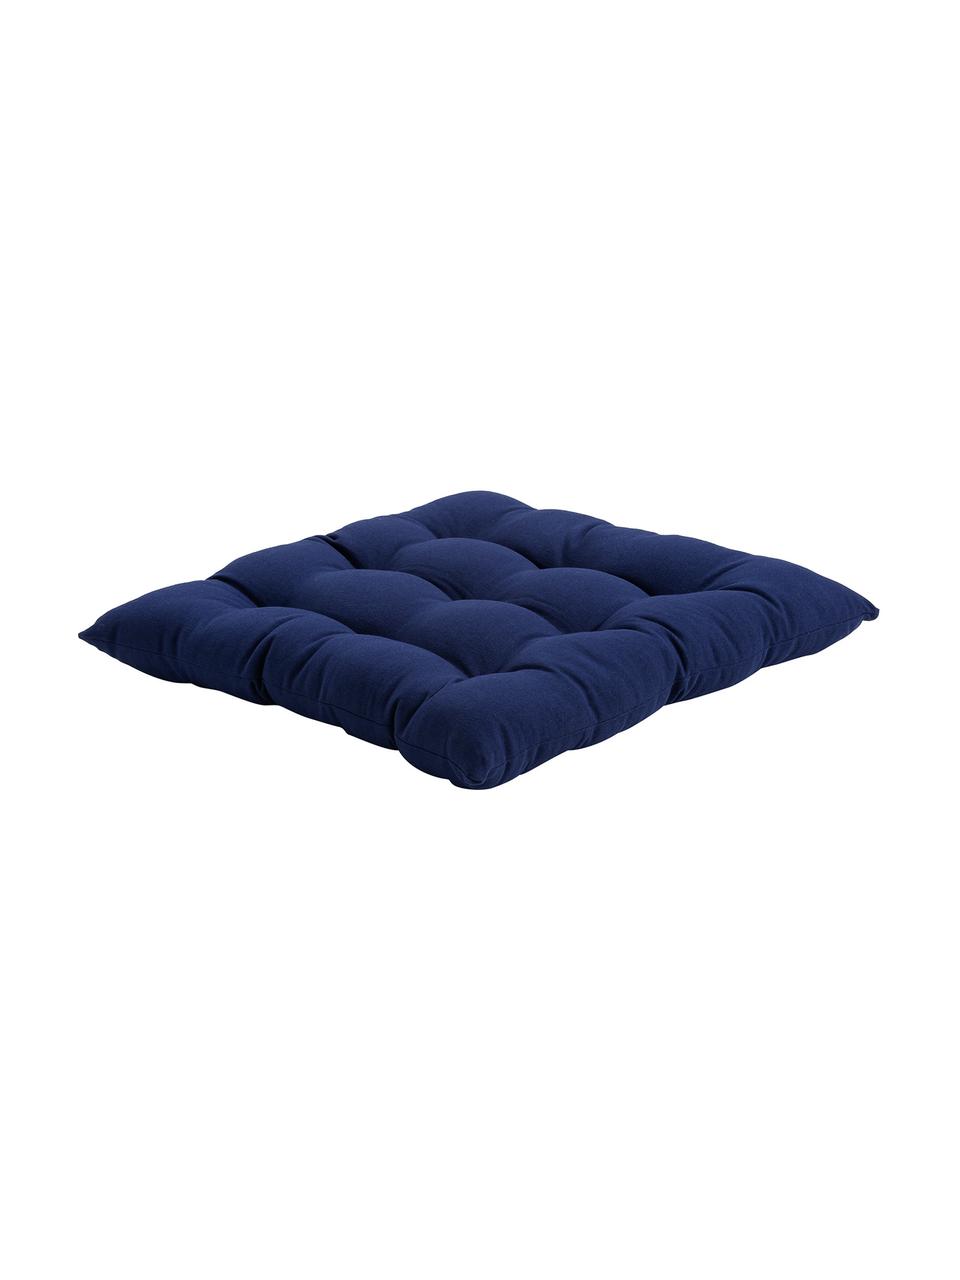 Sitzkissen Ava, 2 Stück, Bezug: 100% Baumwolle, Marineblau, B 40 x L 40 cm